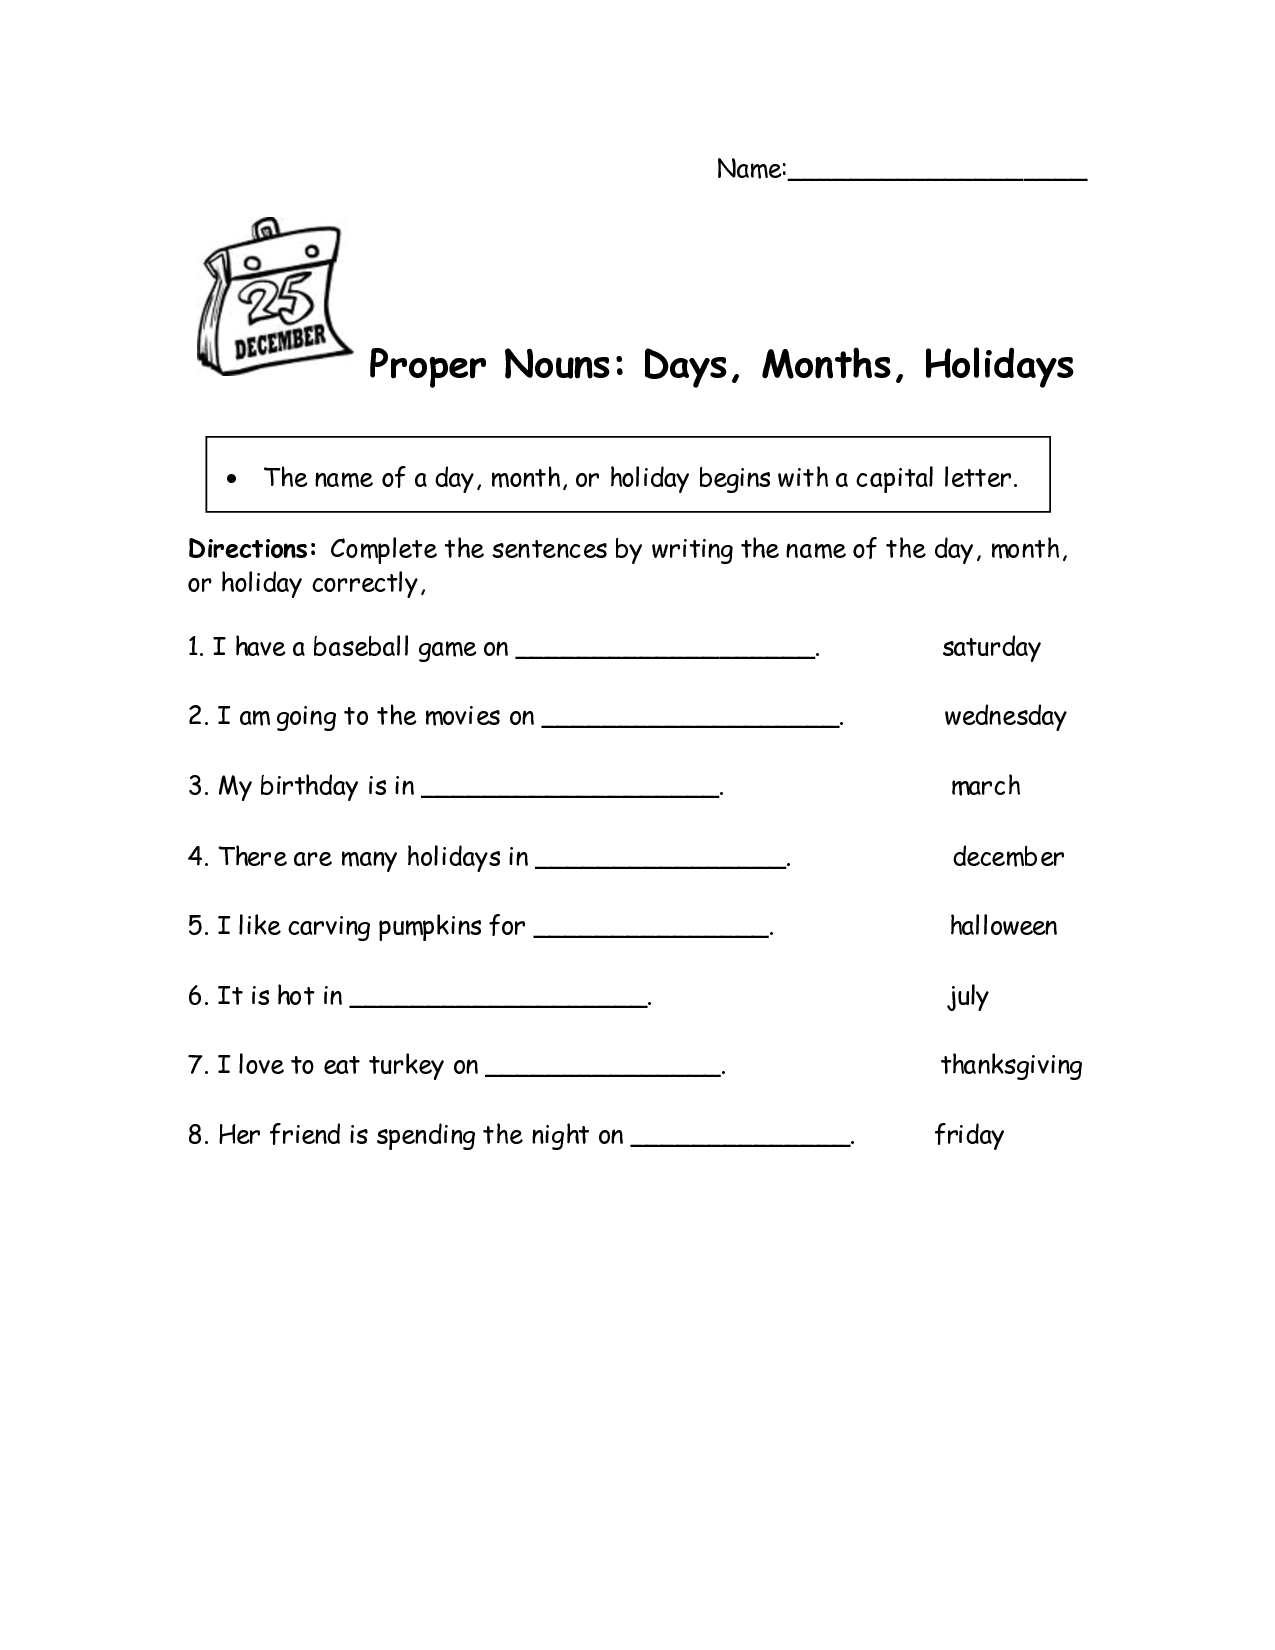 relative-pronouns-worksheets-pdf